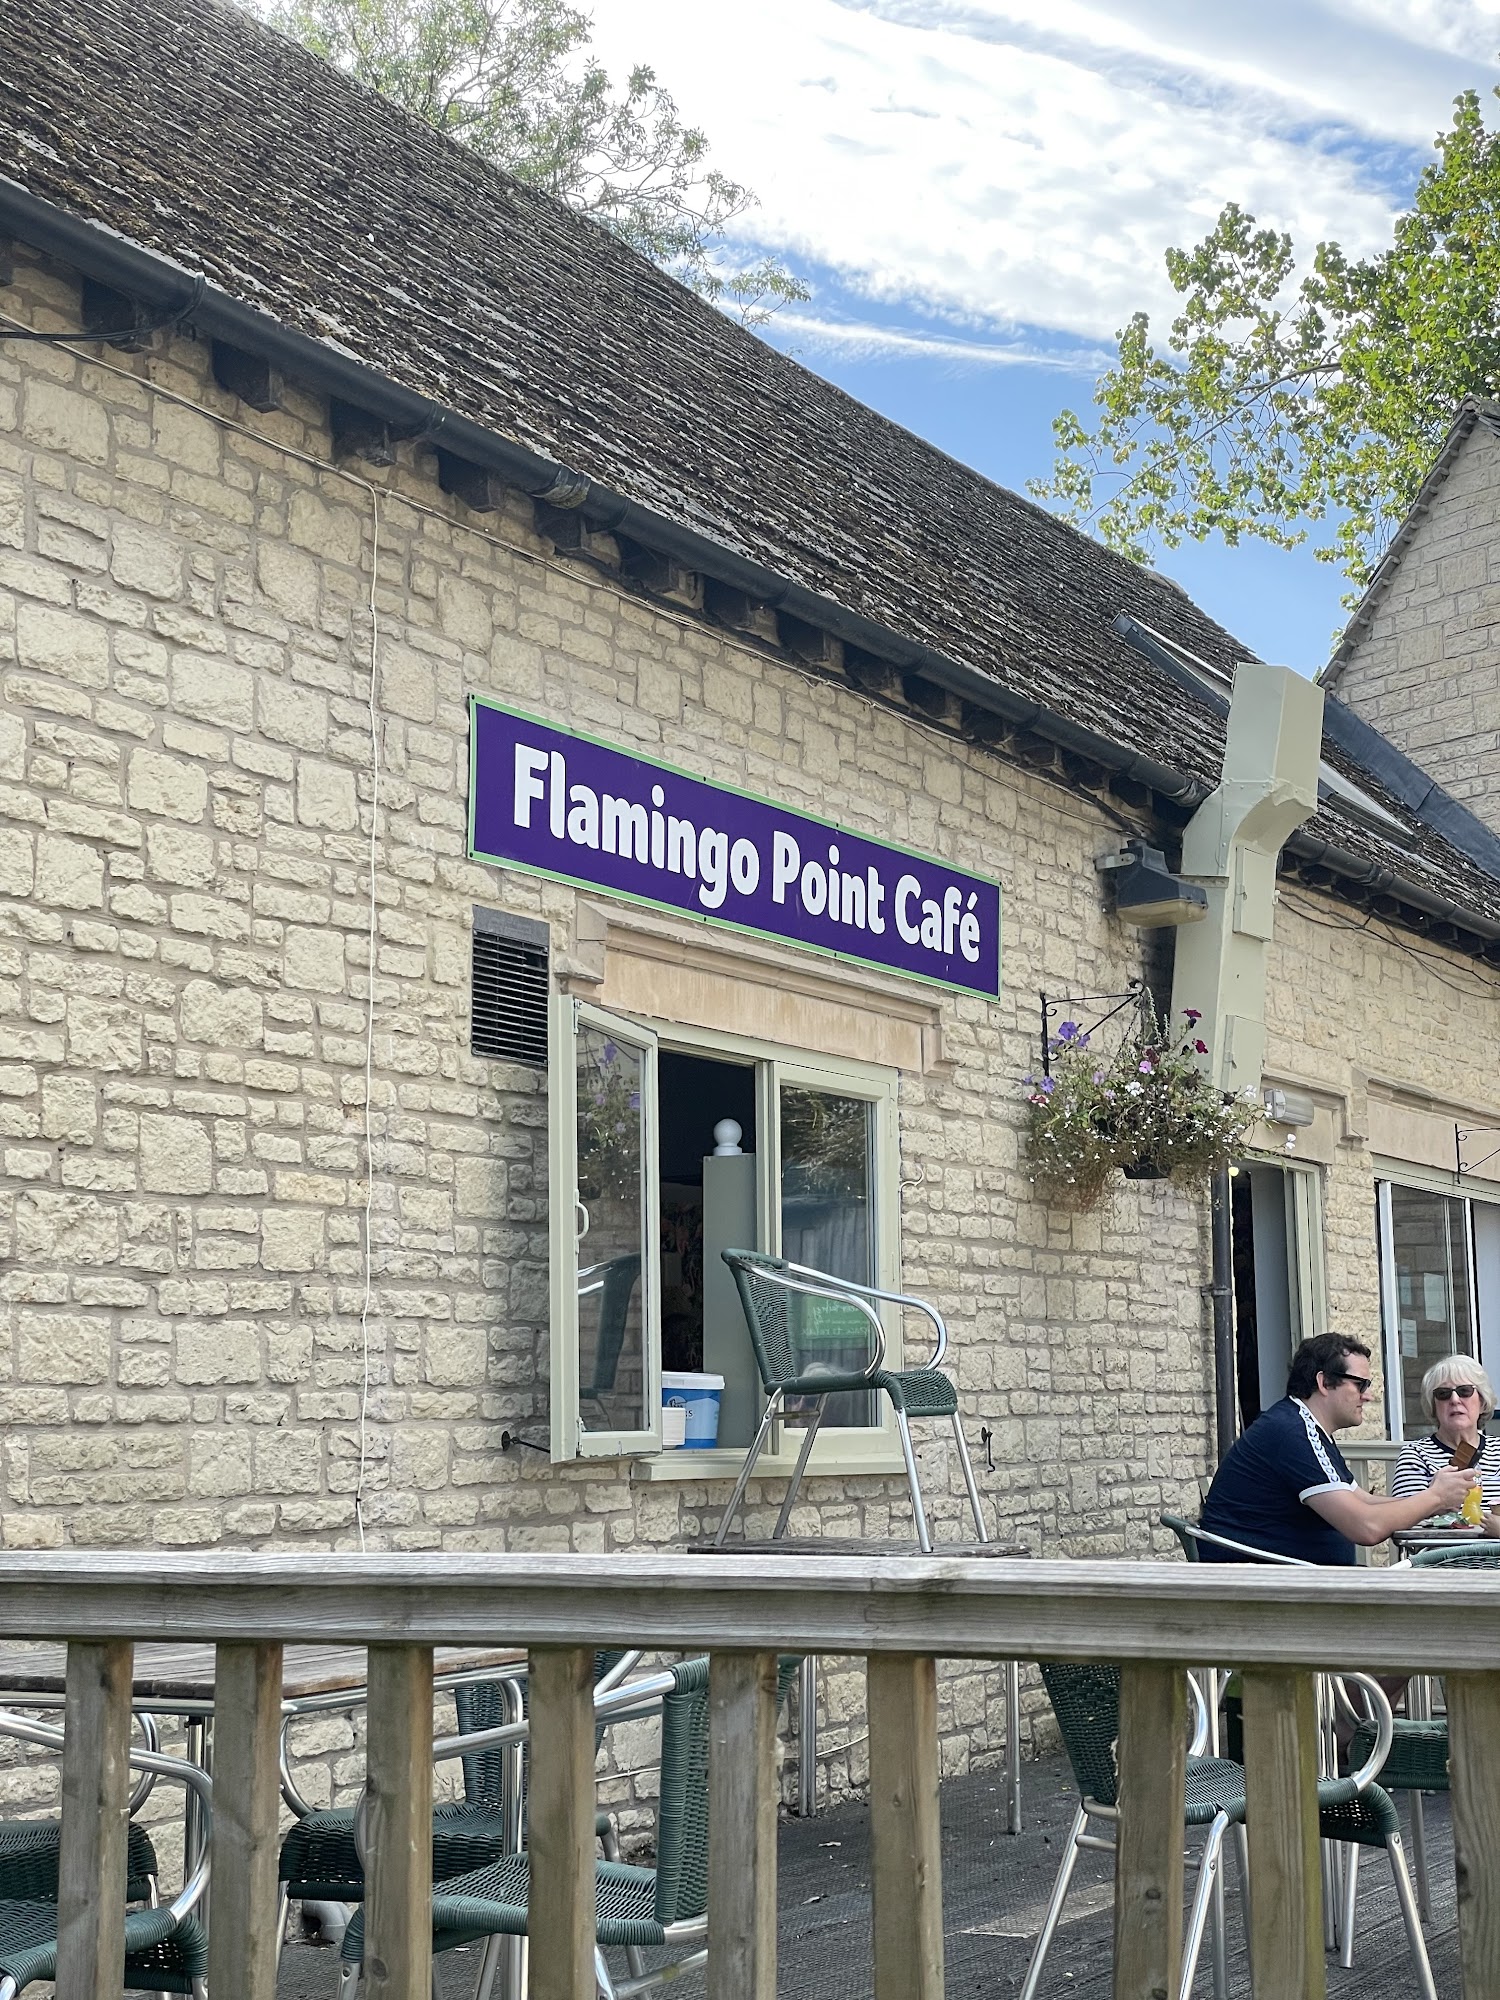 Flamingo point cafe